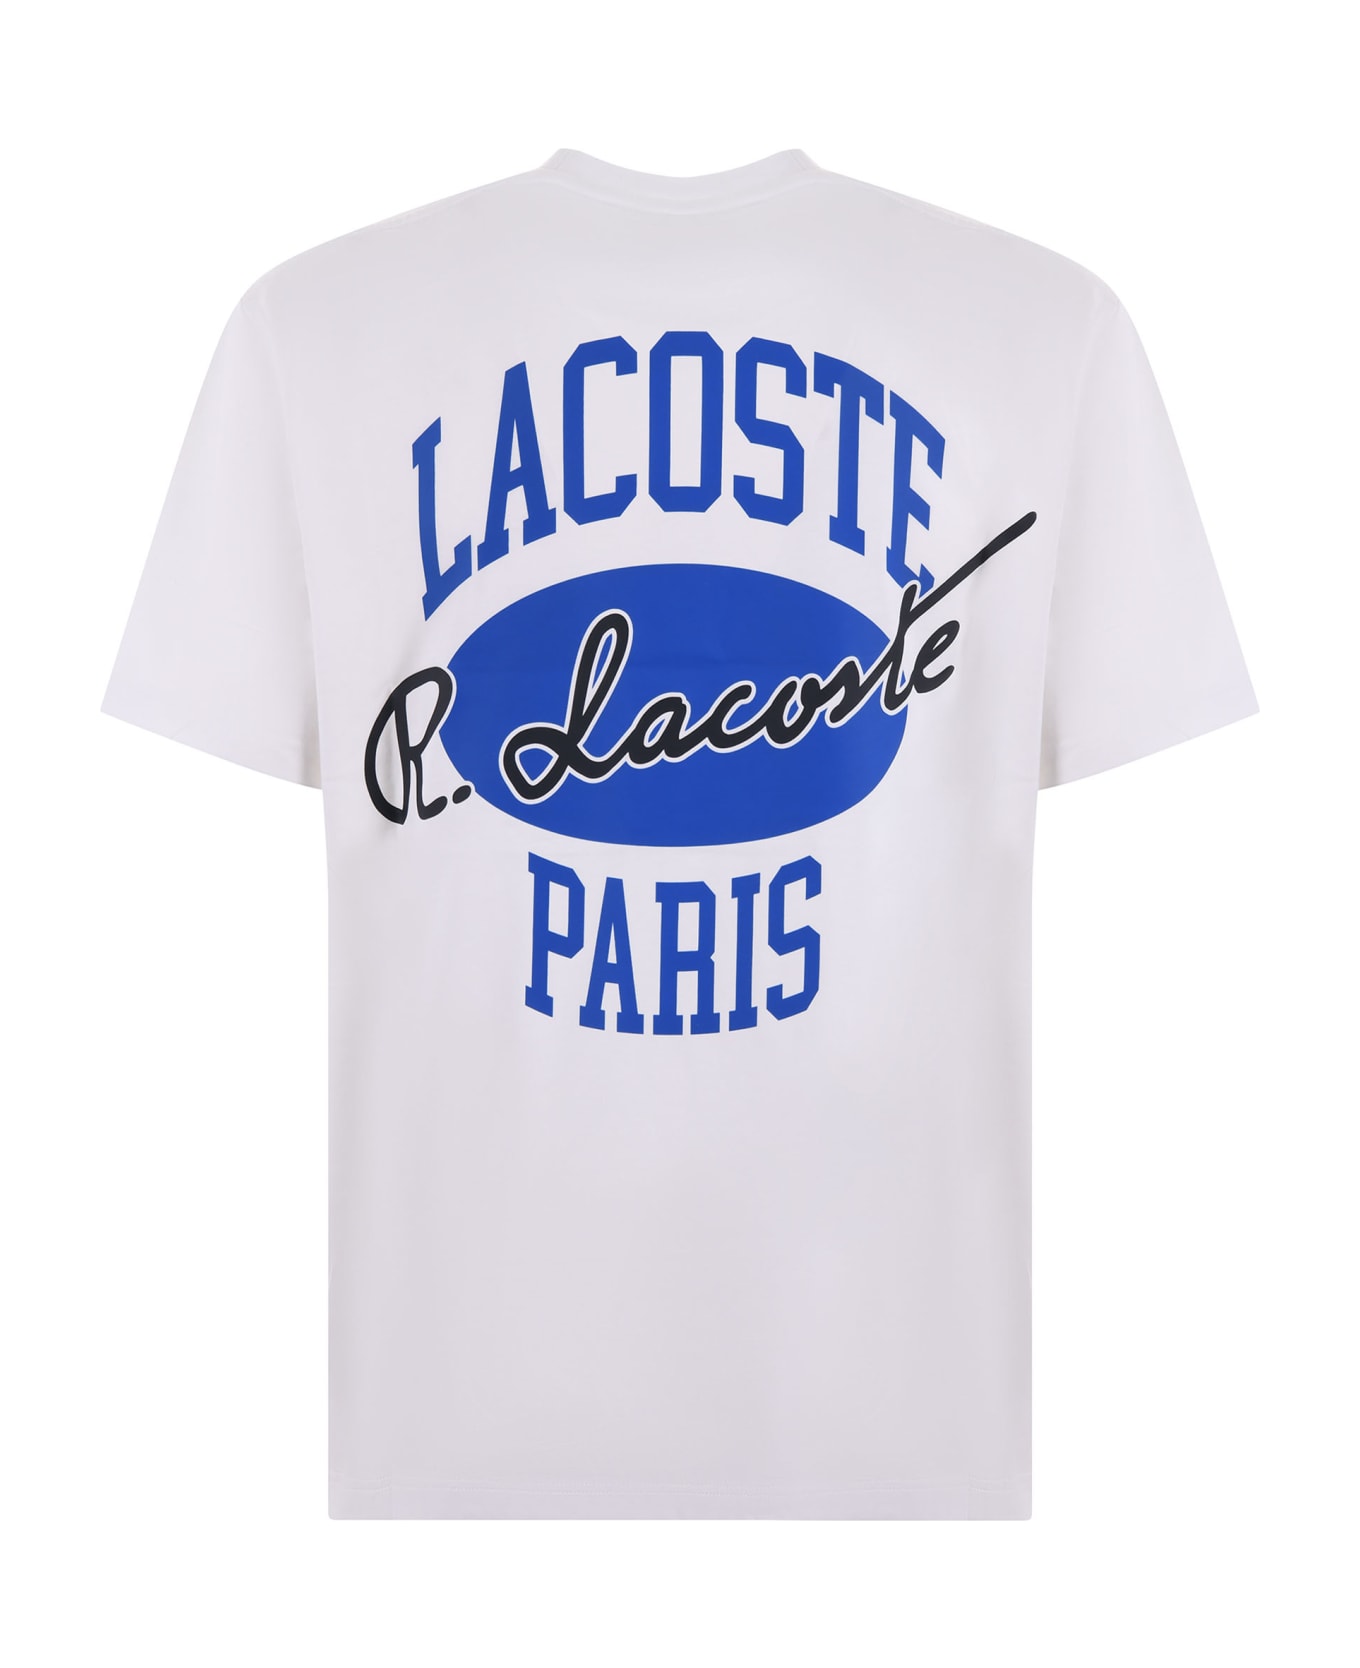 Lacoste T-shirt - Bianco シャツ